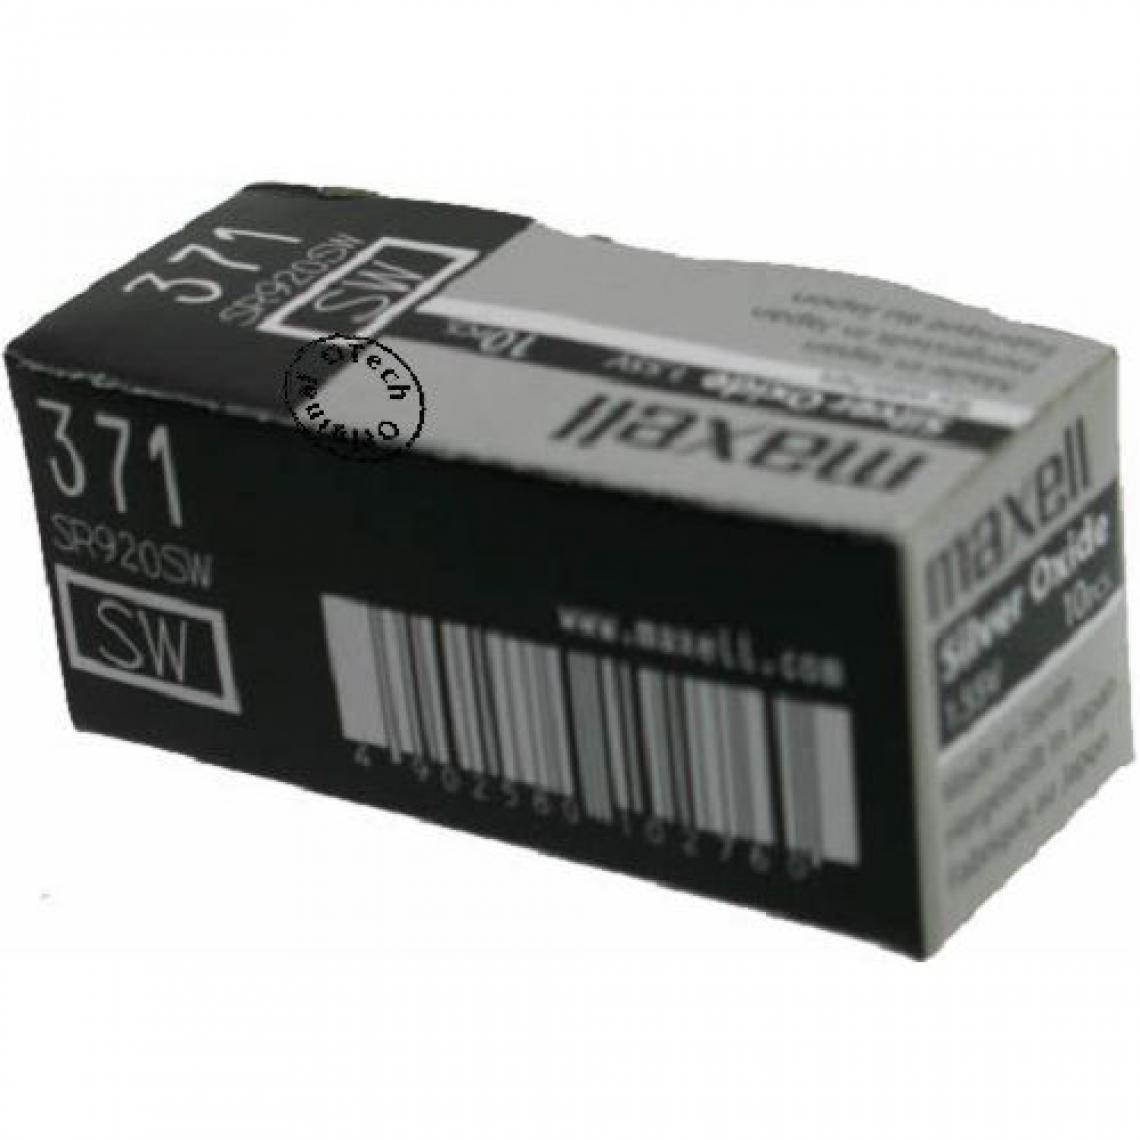 Otech - Pack de 10 piles maxell pour MAXELL SR921 - Piles rechargeables